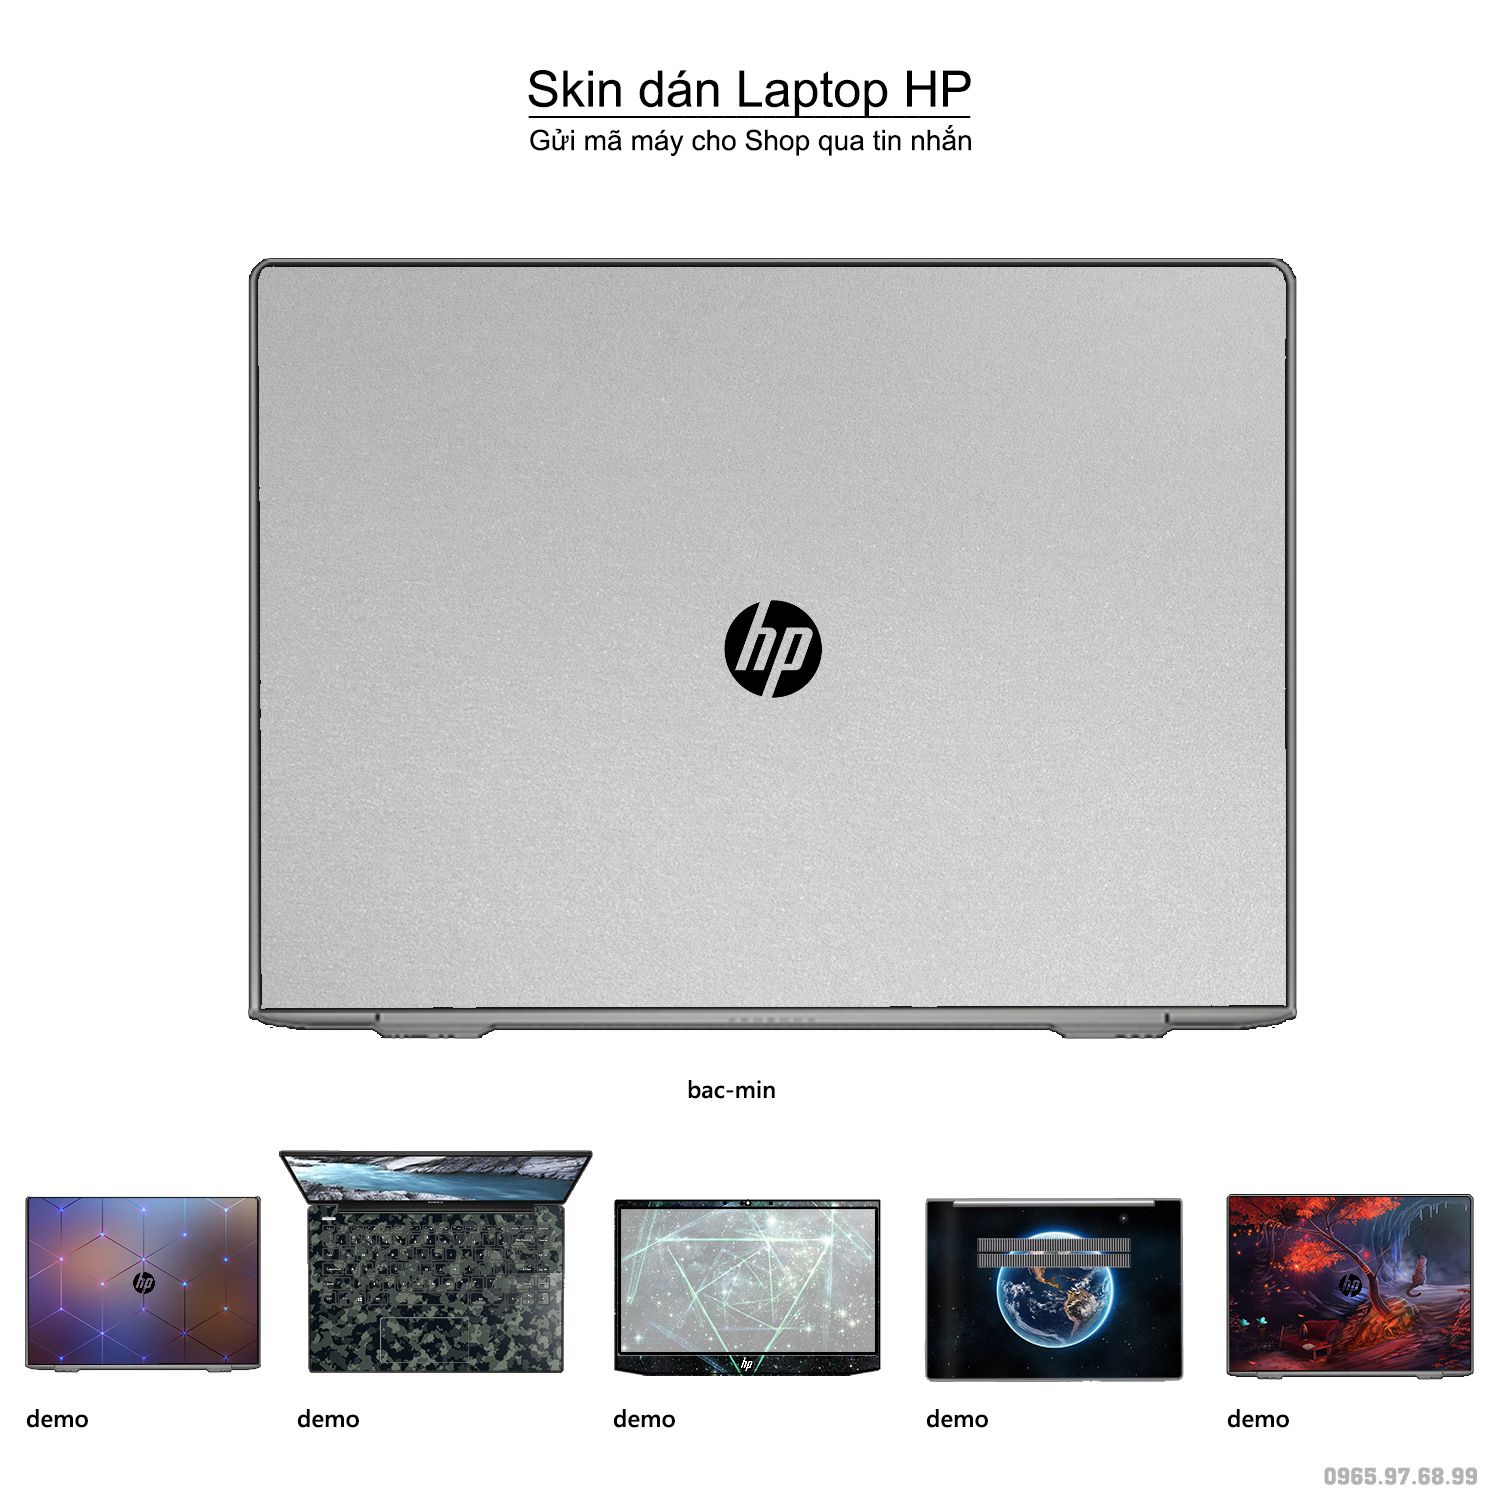 Giảm Giá Decal Skin Dán Laptop Hp Mẫu Aluminum Chrome Bạc Mịn - Beecost